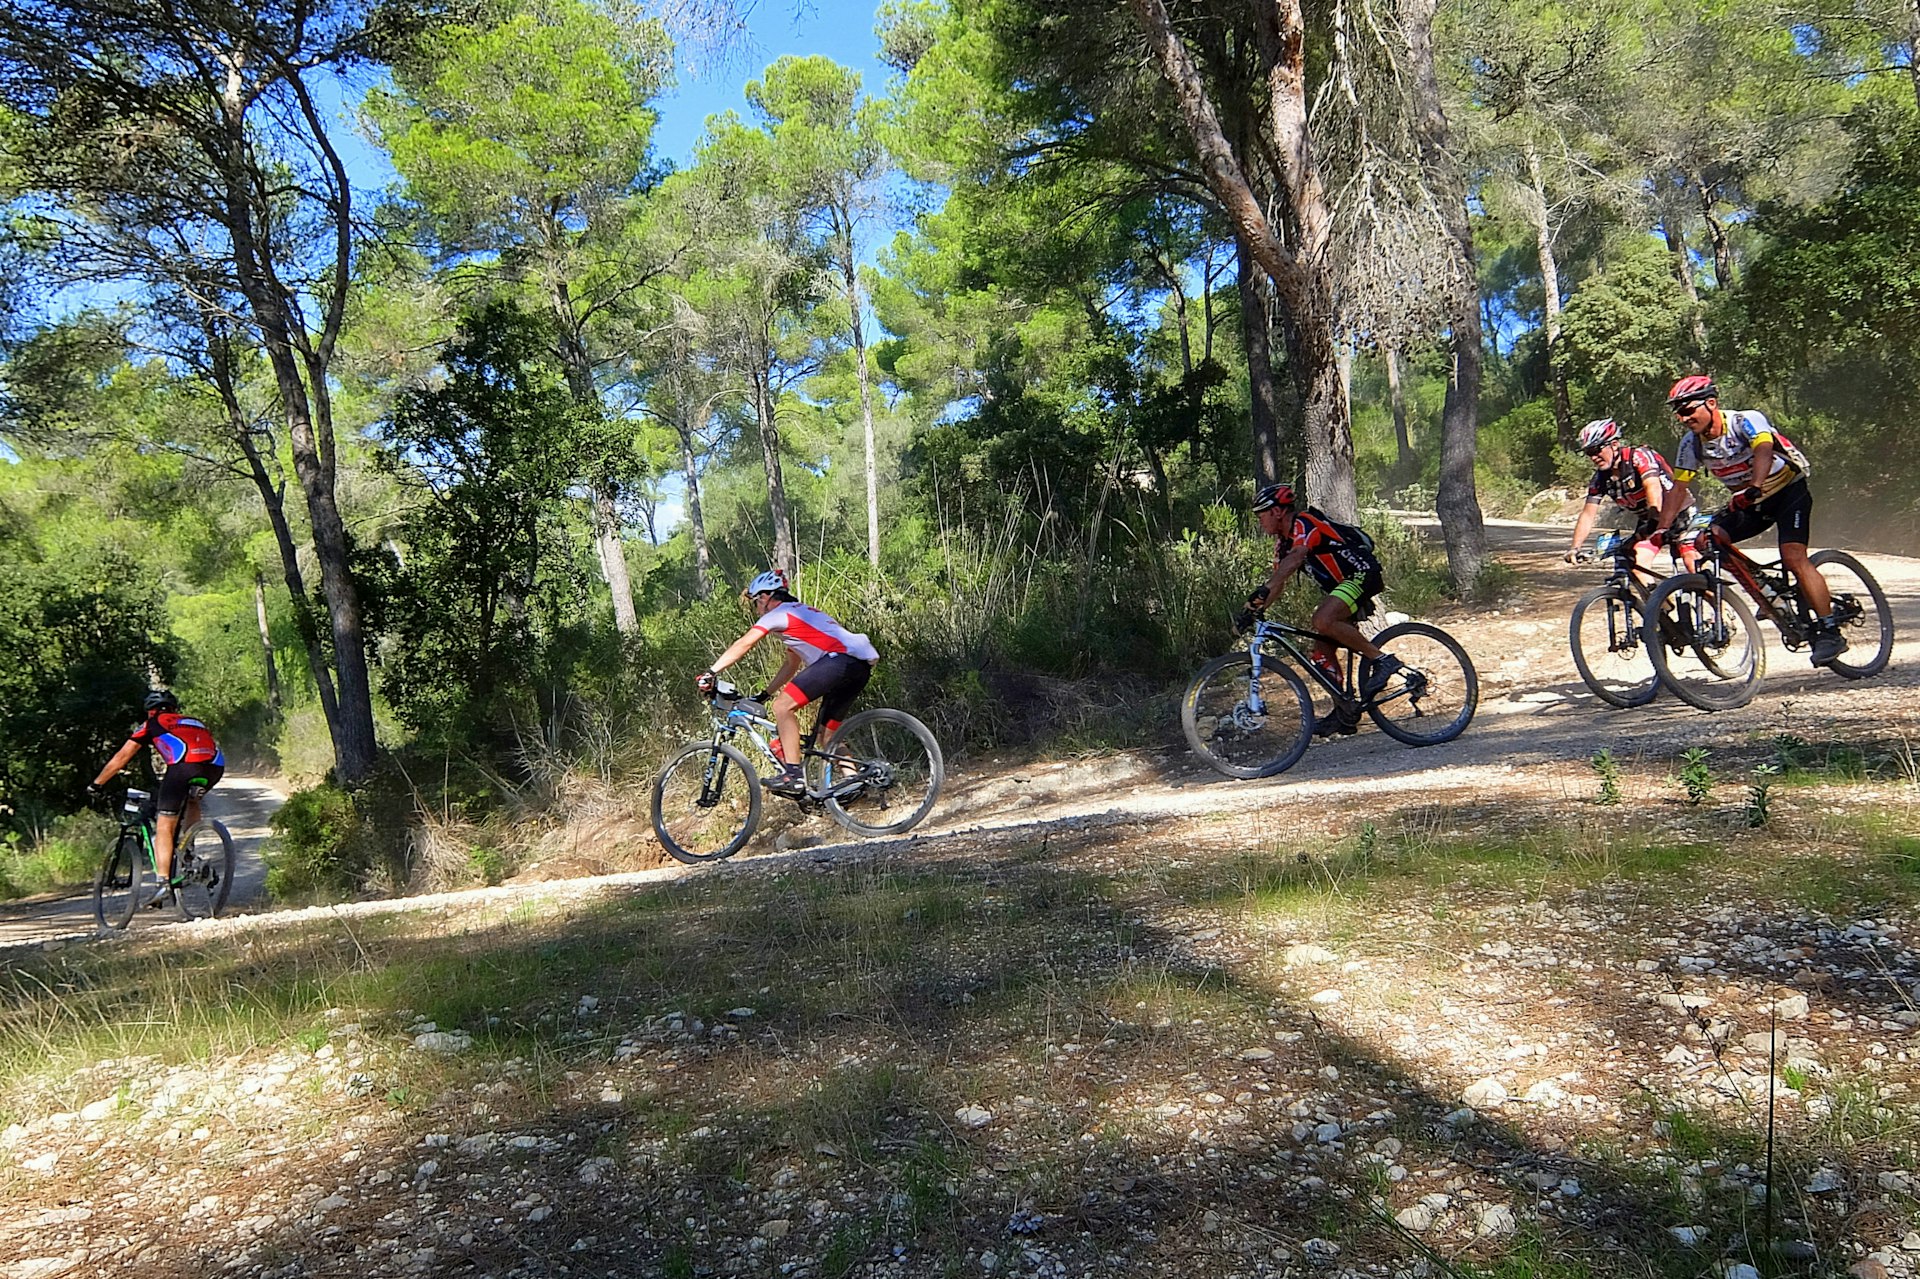 Mountain bikers ride along the Camí de Cavalls path in Menorca